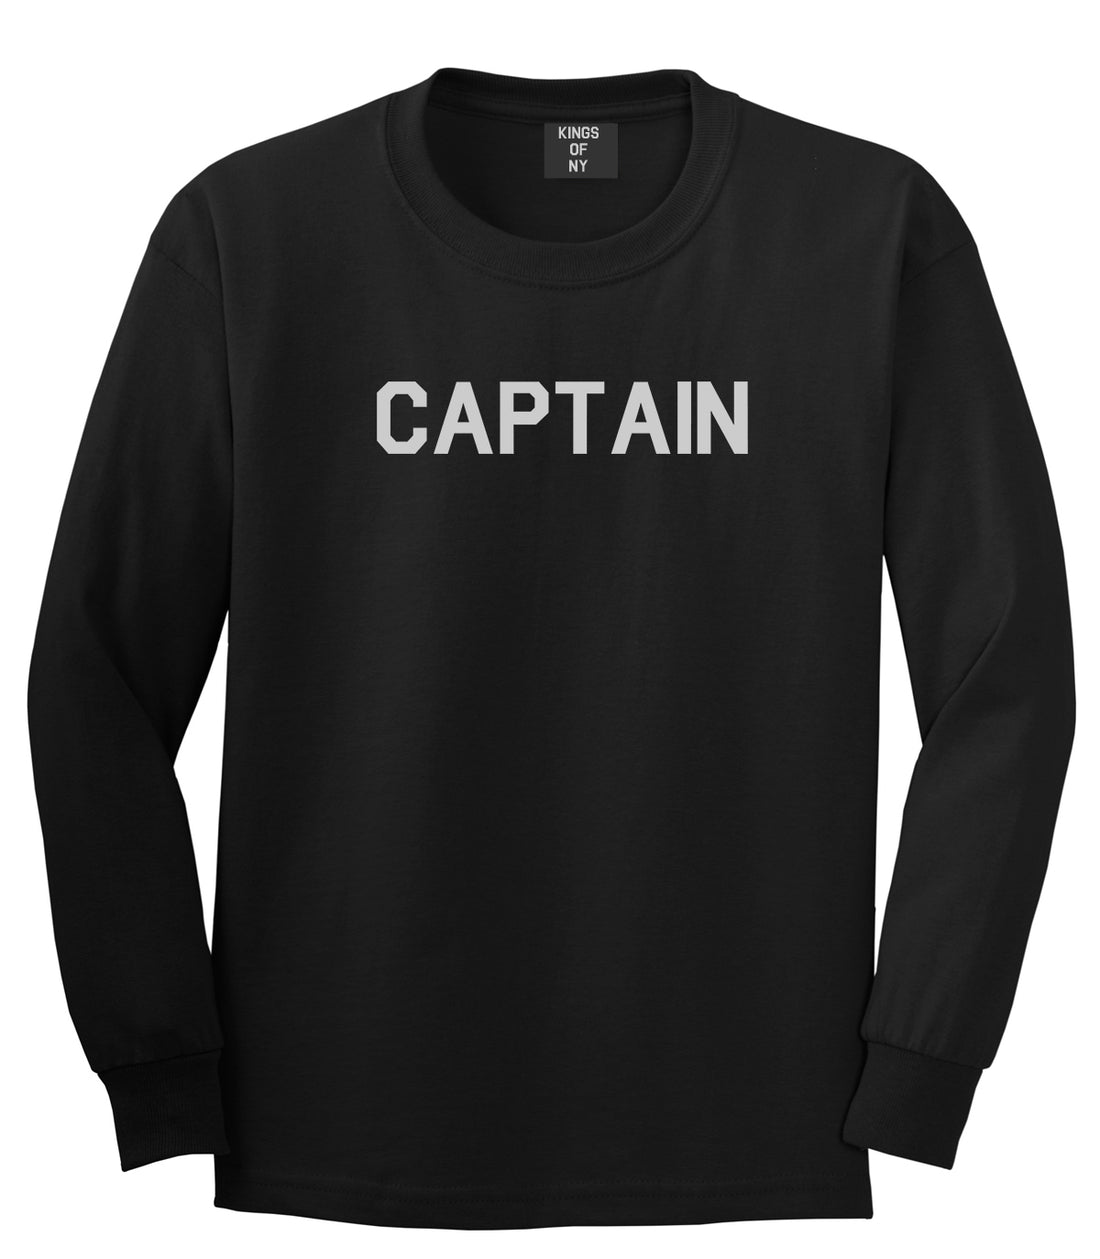 Captain Black Long Sleeve T-Shirt by Kings Of NY